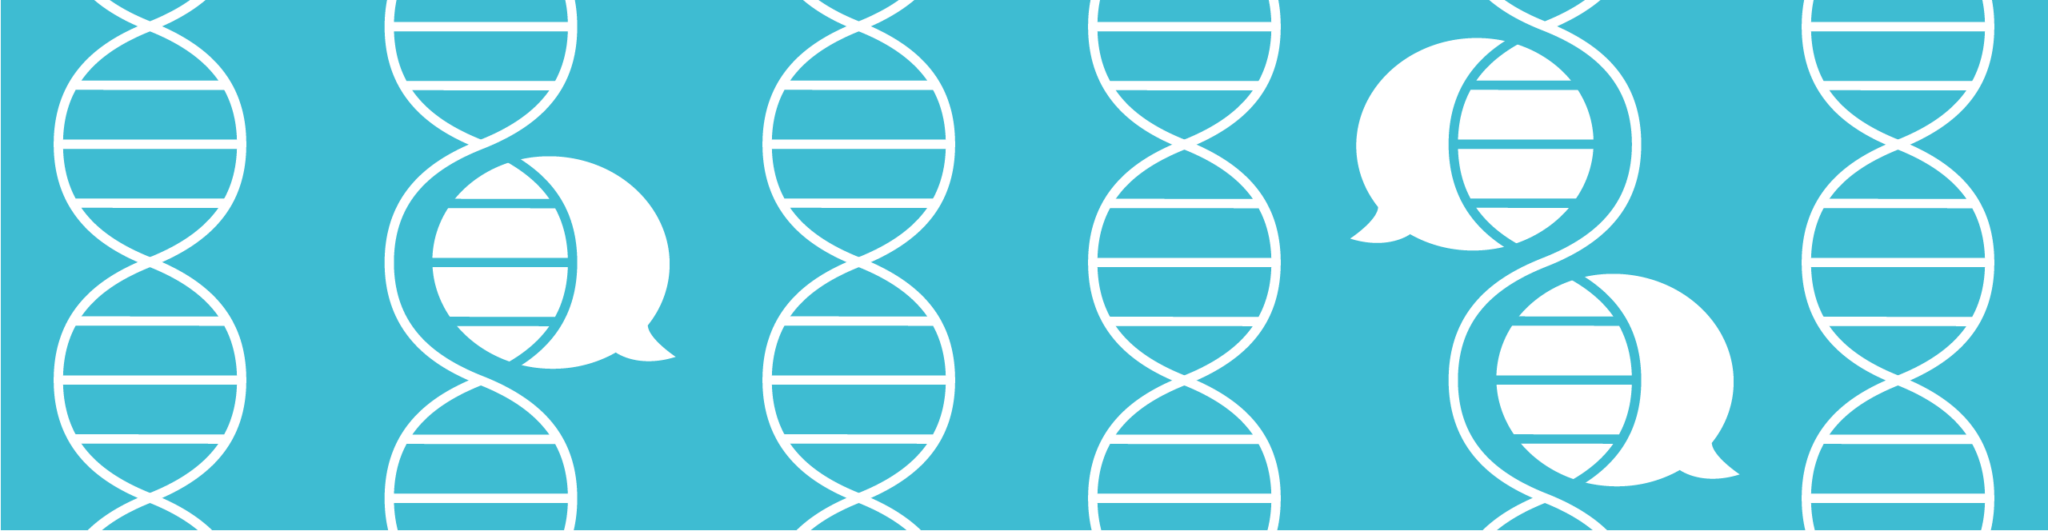 A graphic representing DNA.